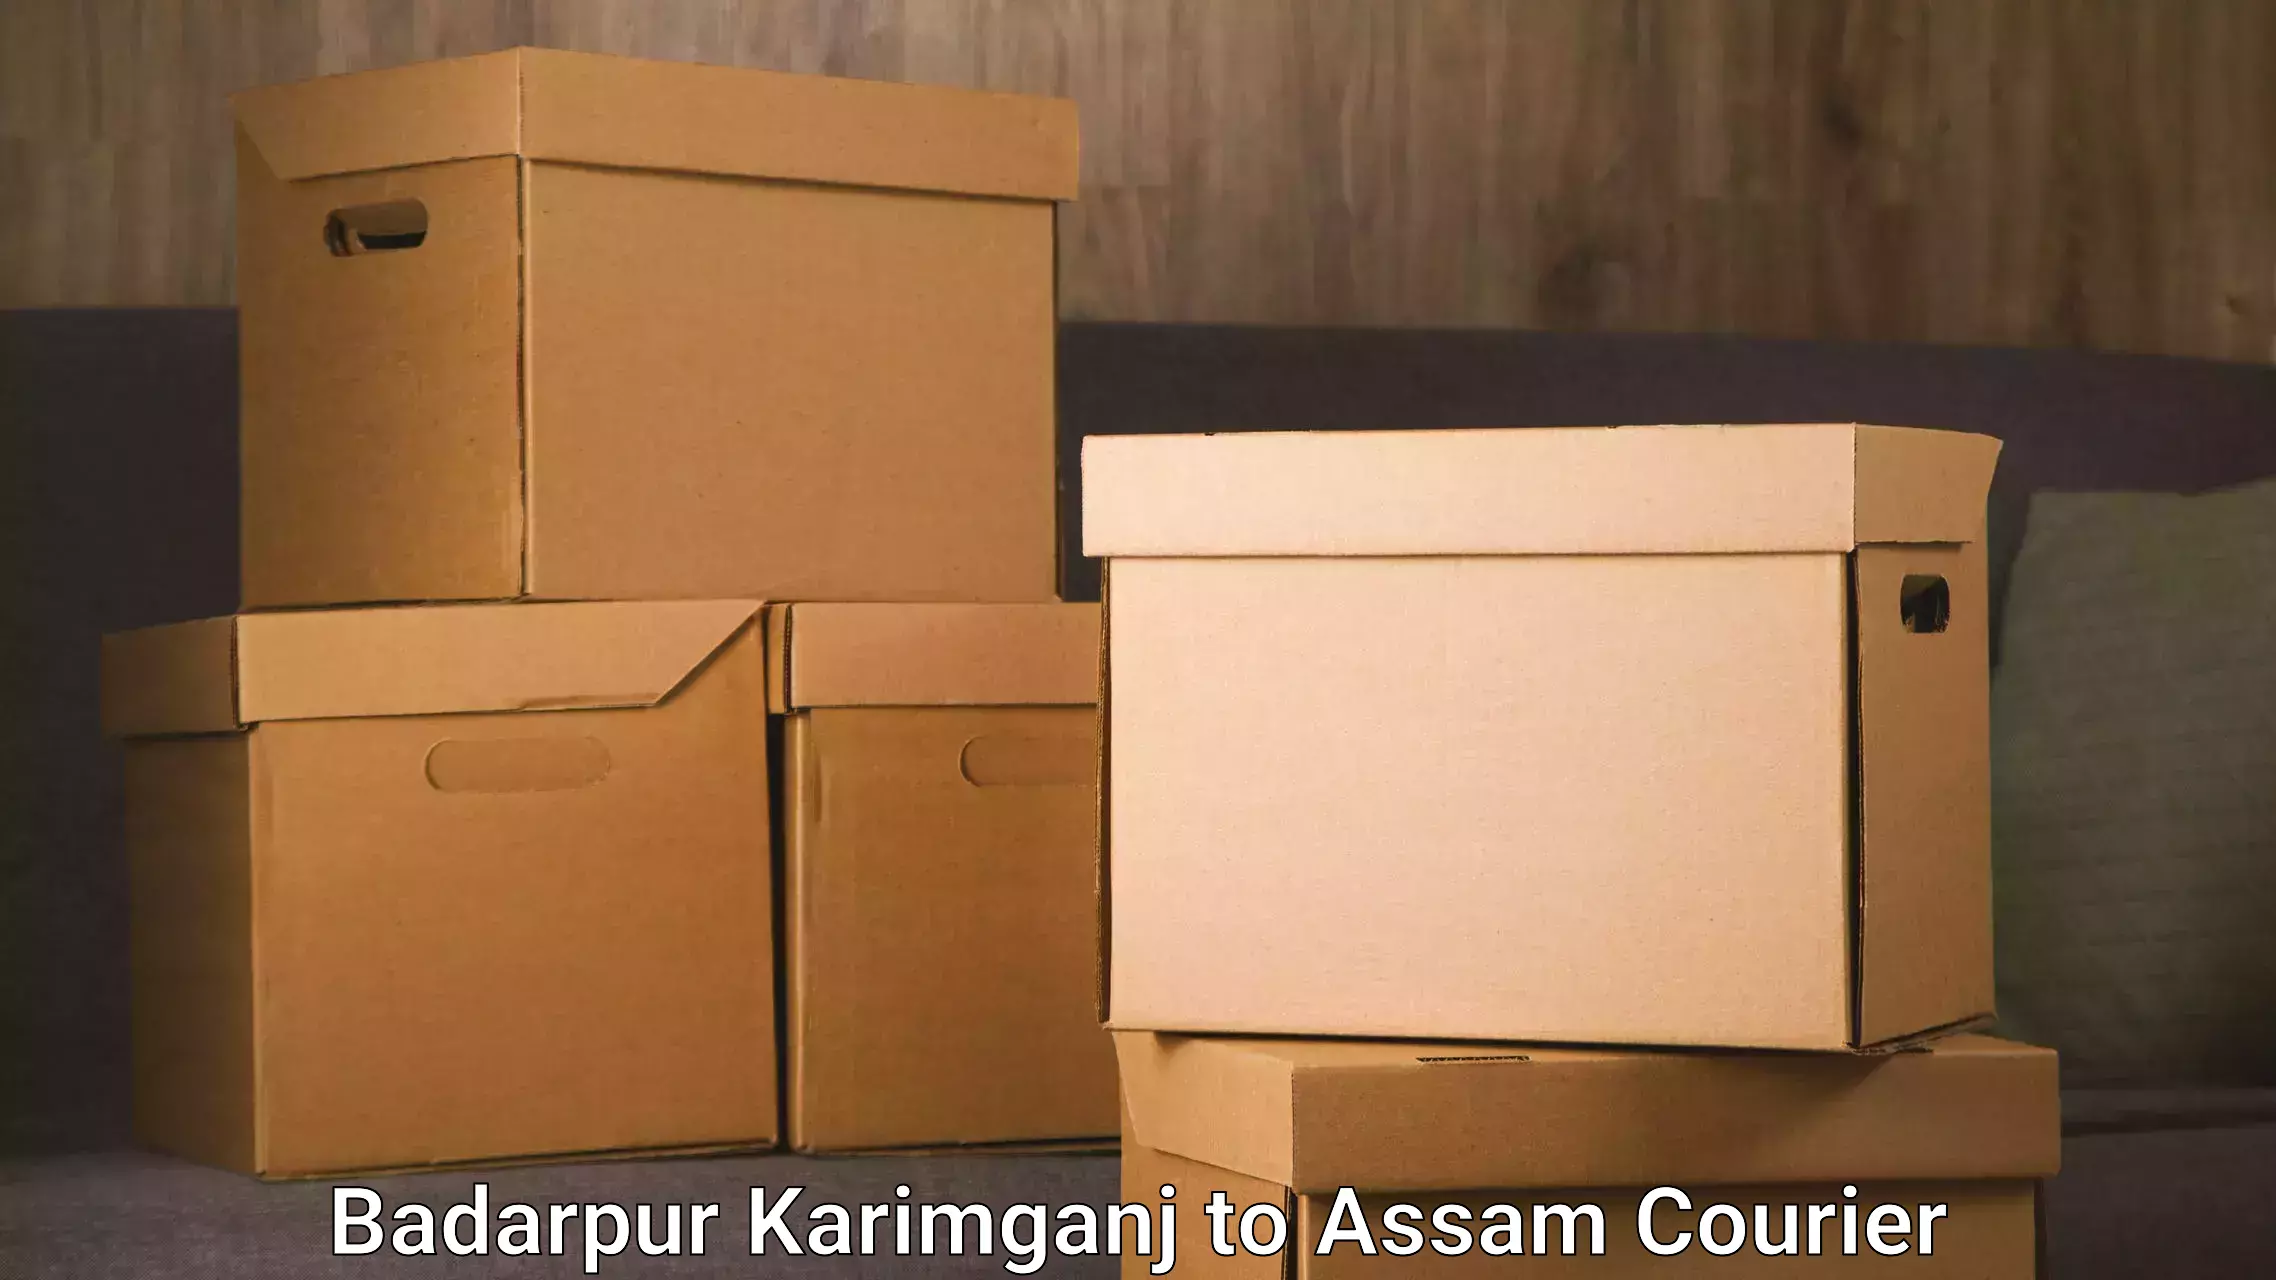 Reliable parcel services Badarpur Karimganj to IIIT Guwahati